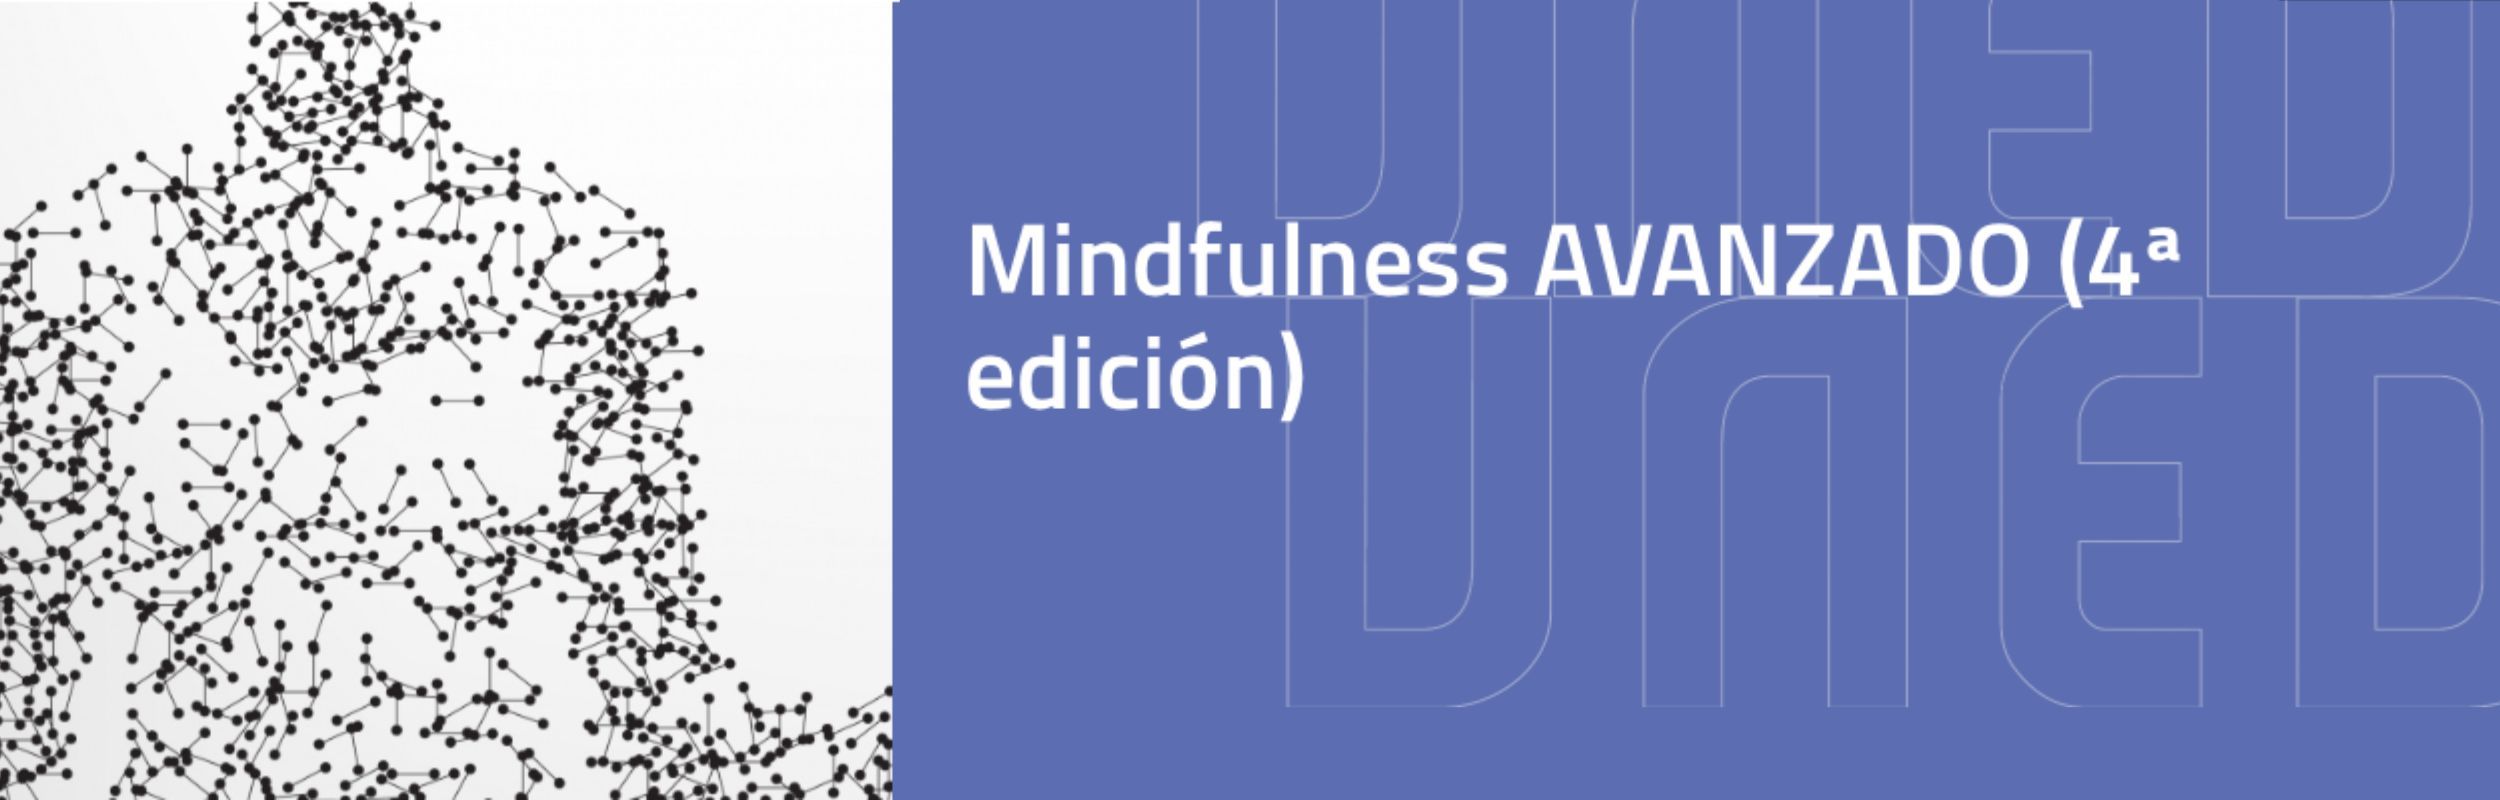 Mindfulness AVANZADO (4ª edición)